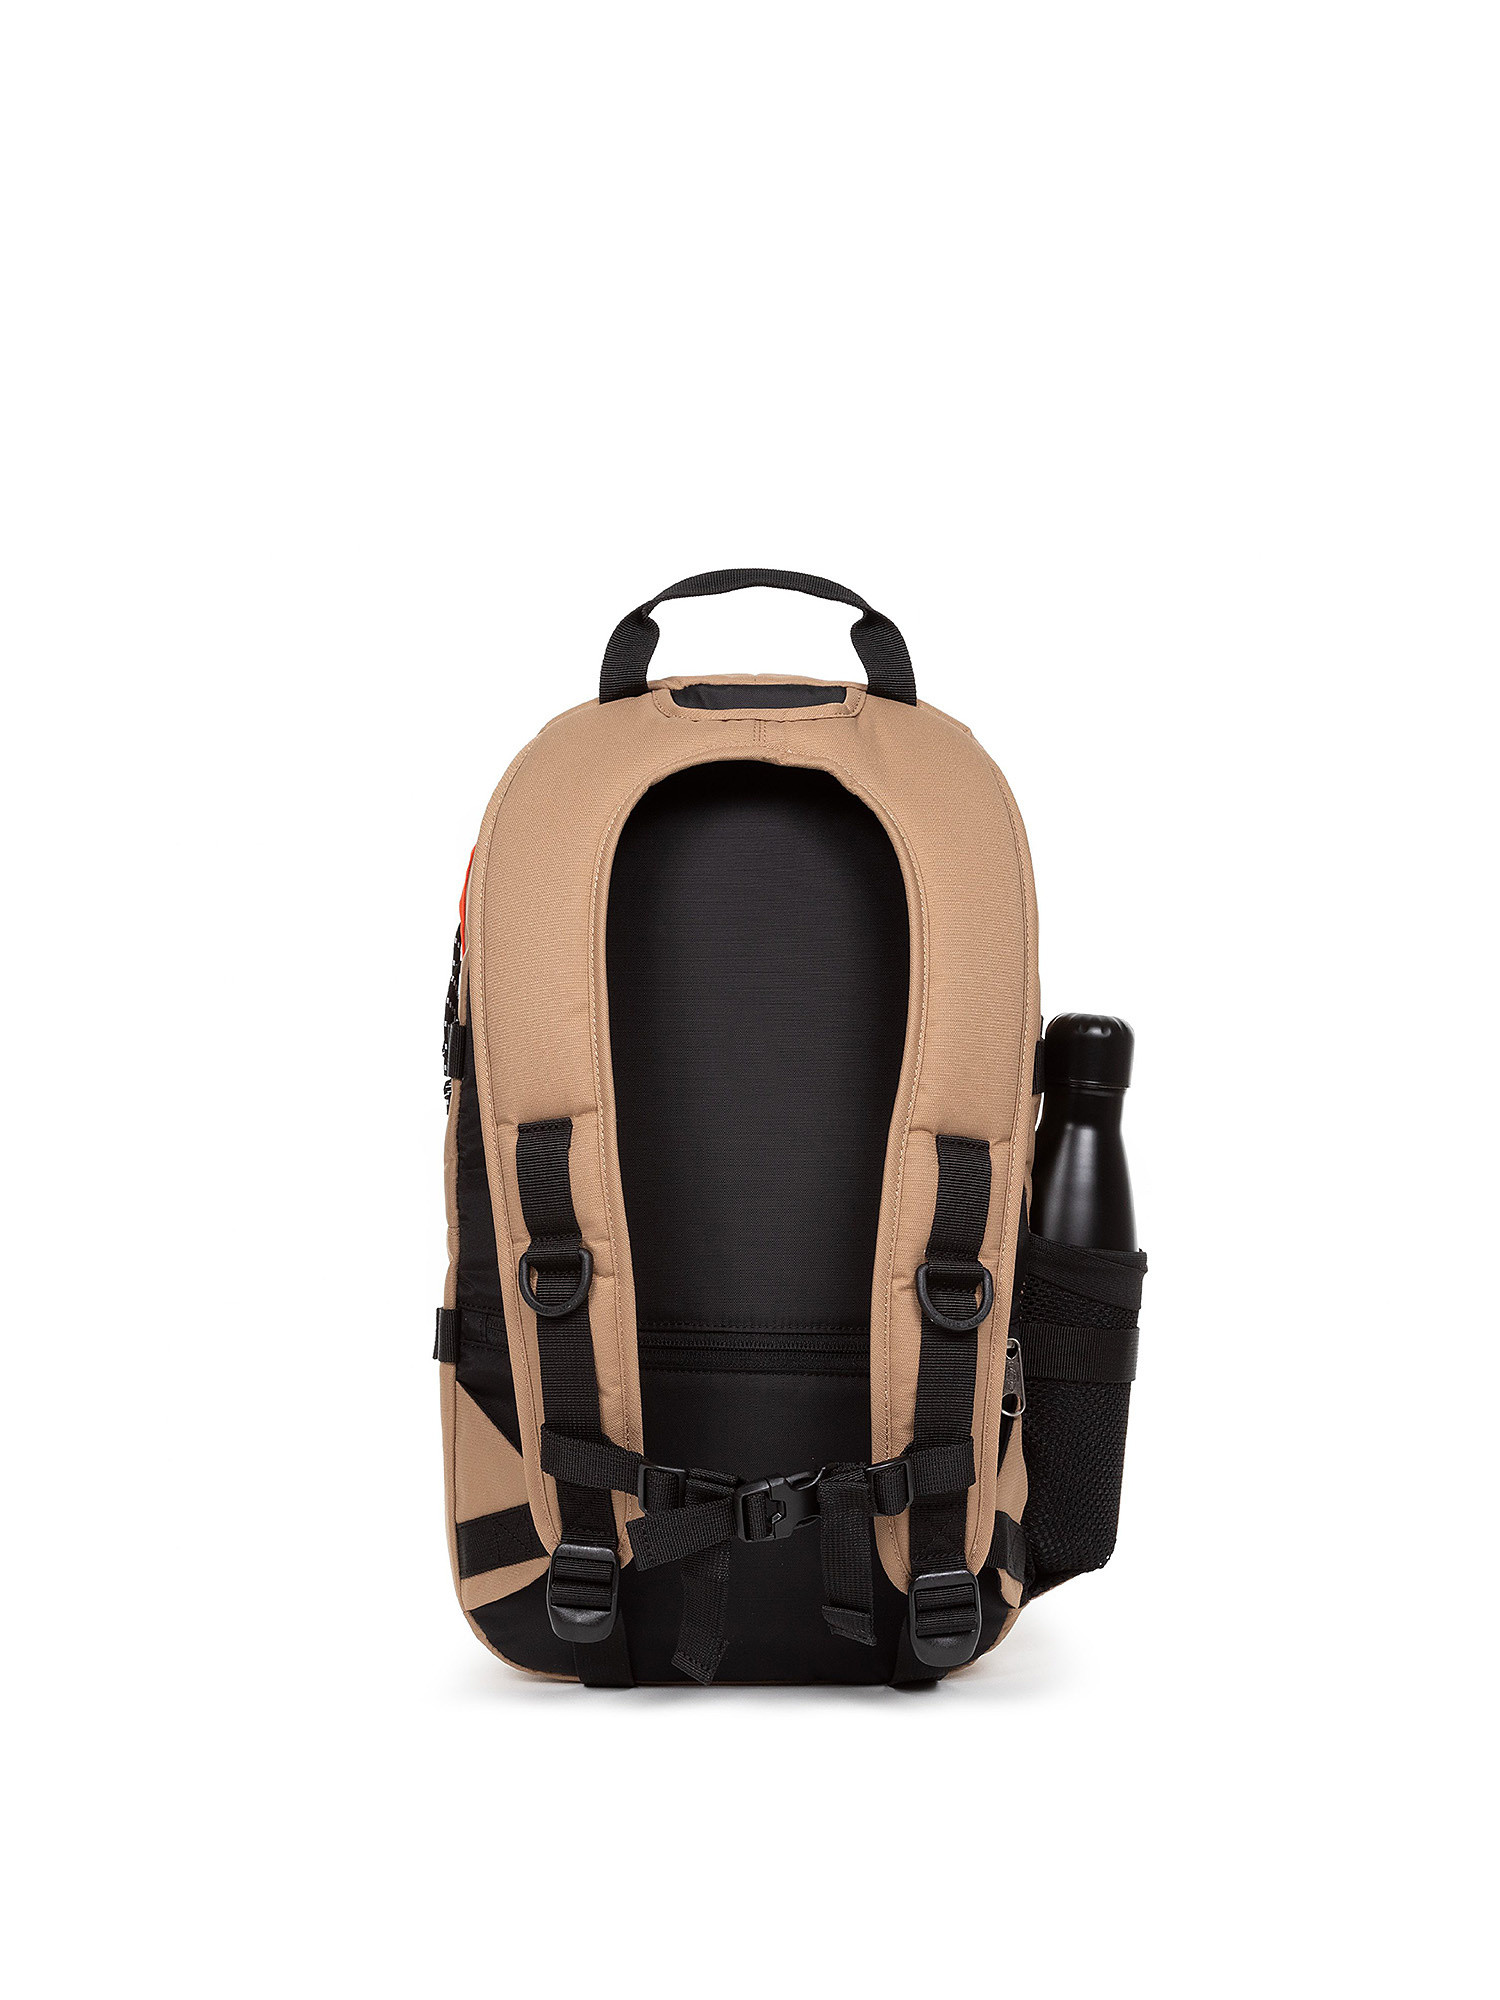 Eastpak - Floid Cs Explore brown backpack, Brown, large image number 2